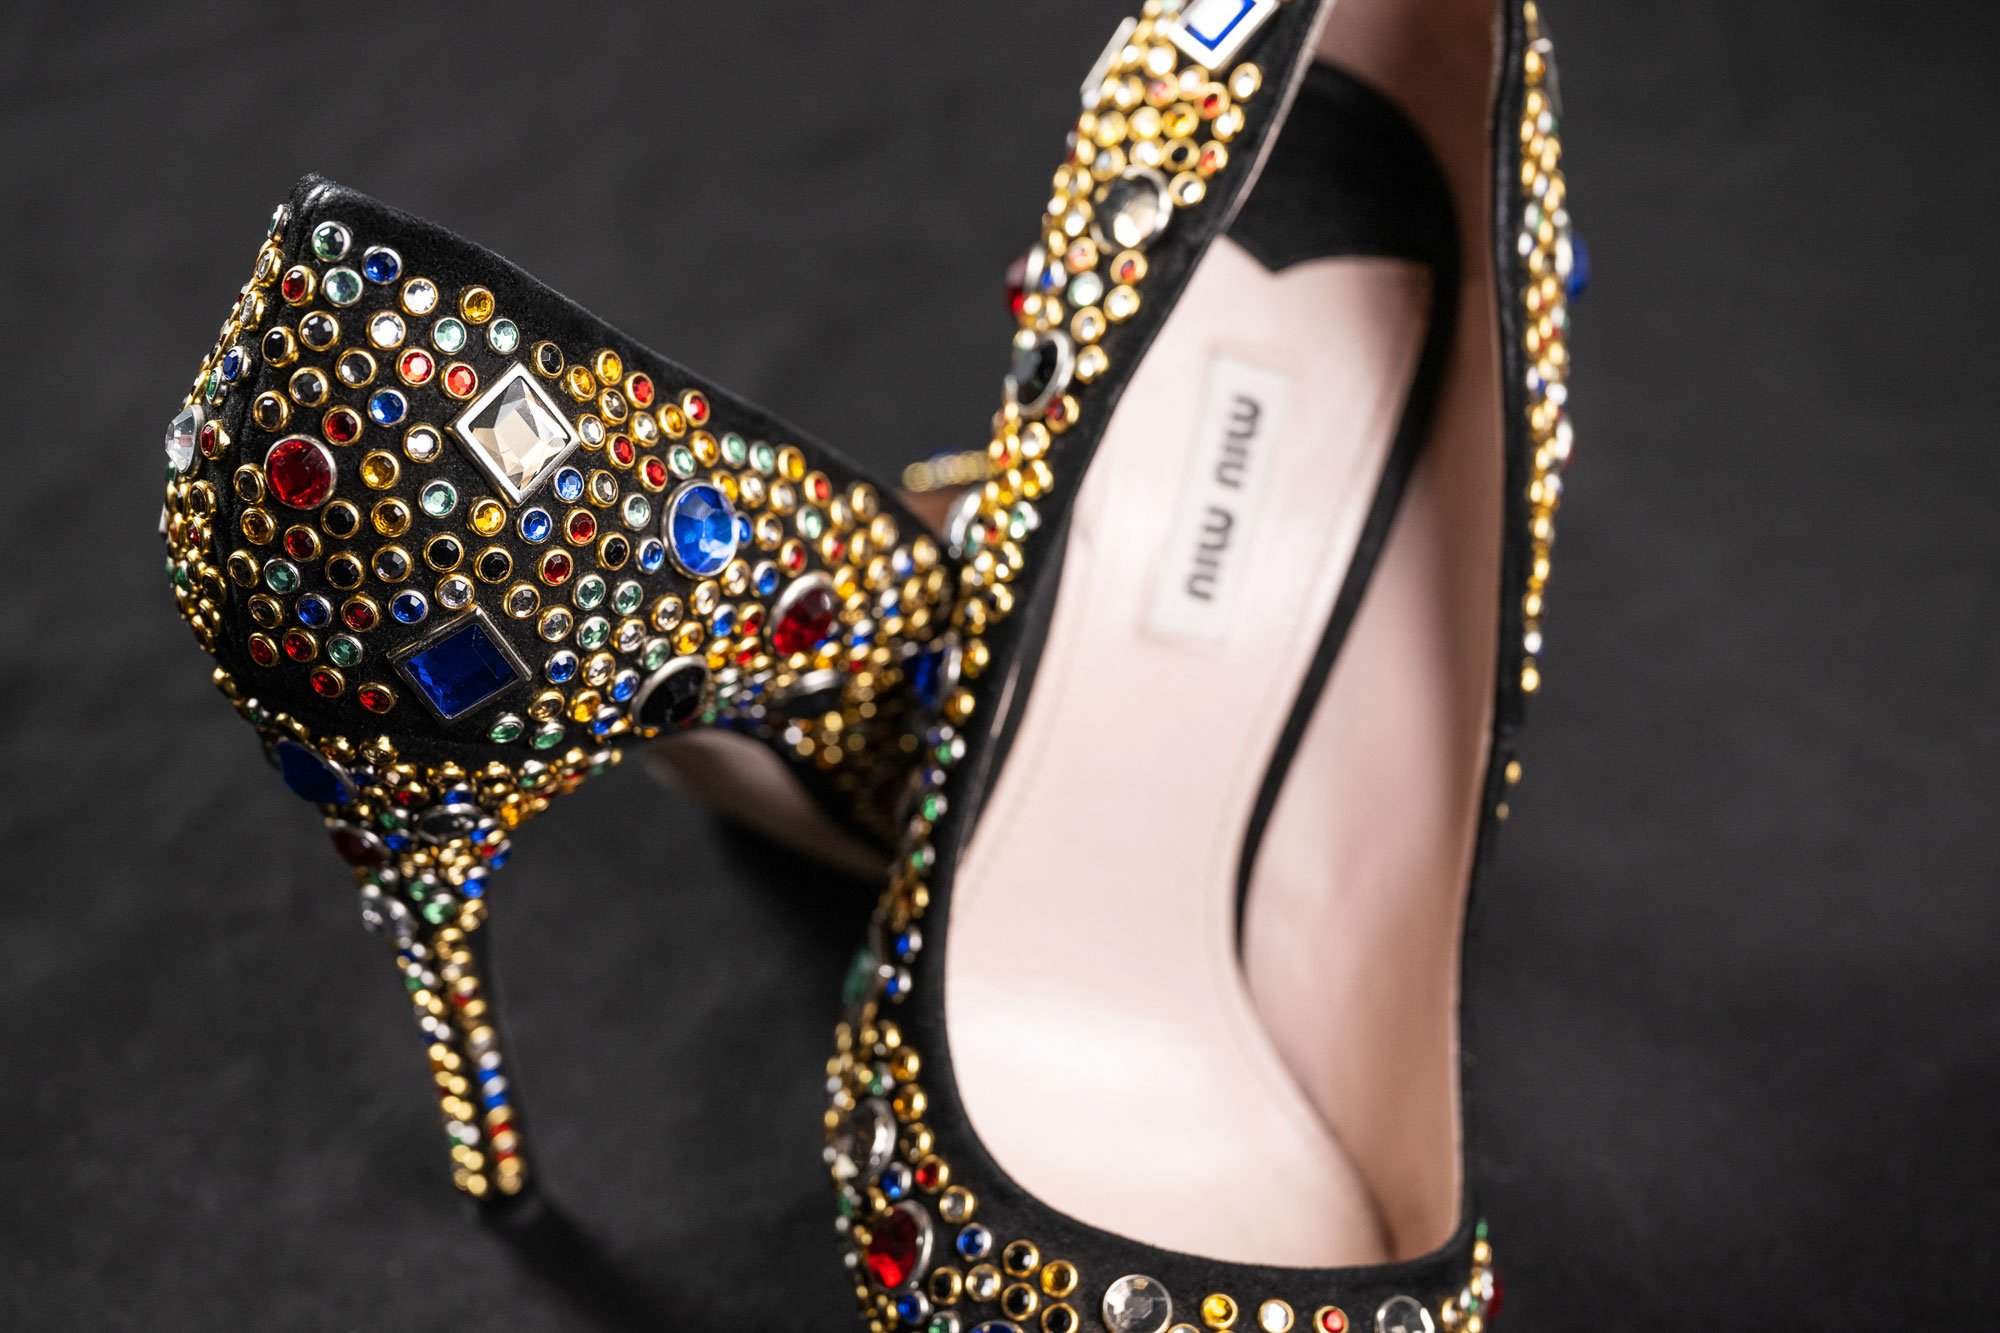 Authentic consignment Miu Miu jeweled heels